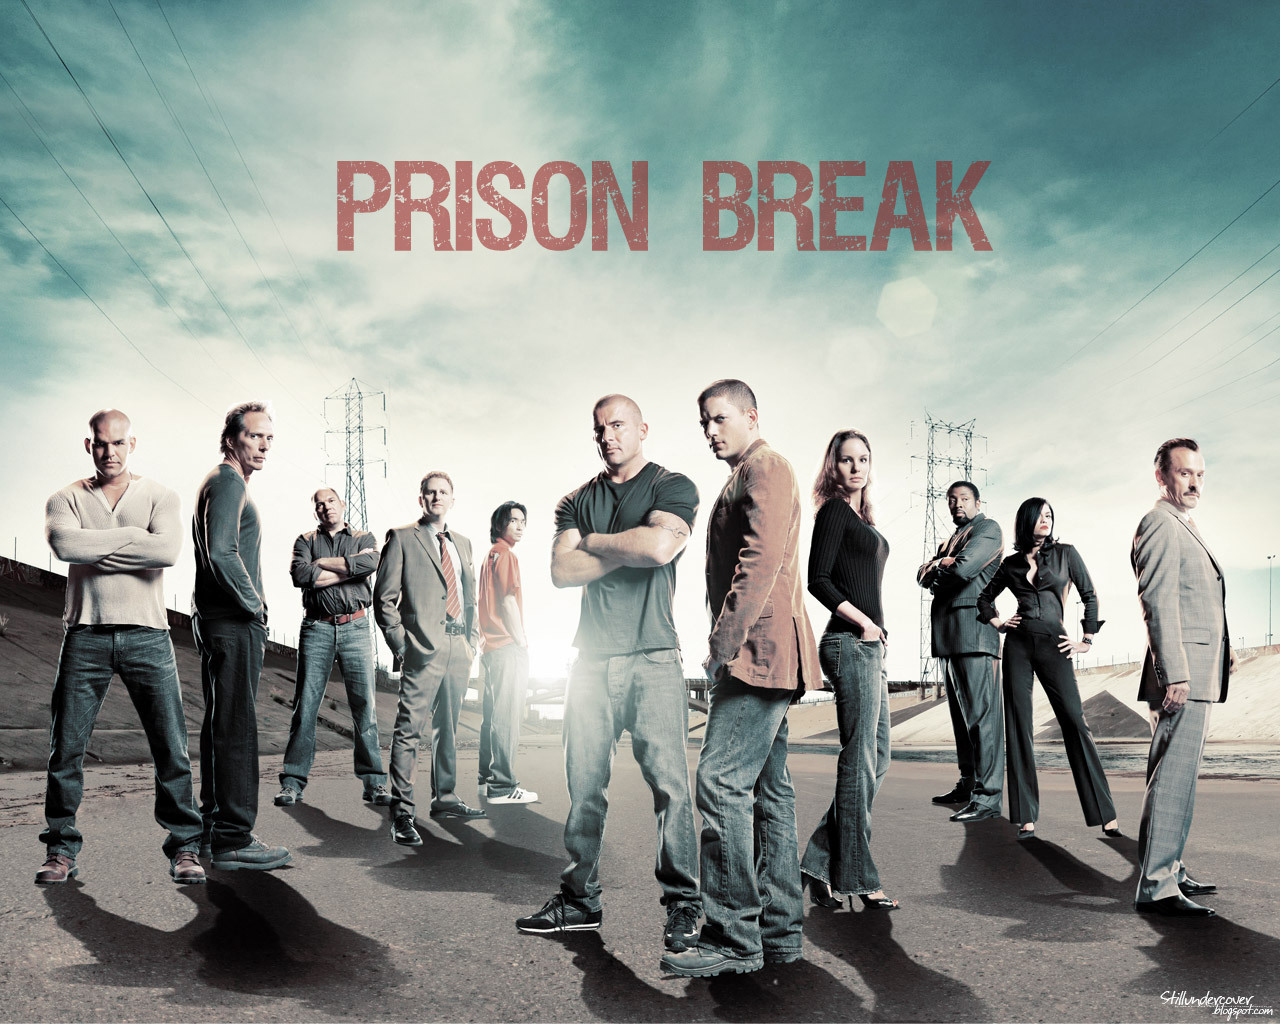 prison break season 2 subtitles english download 720p